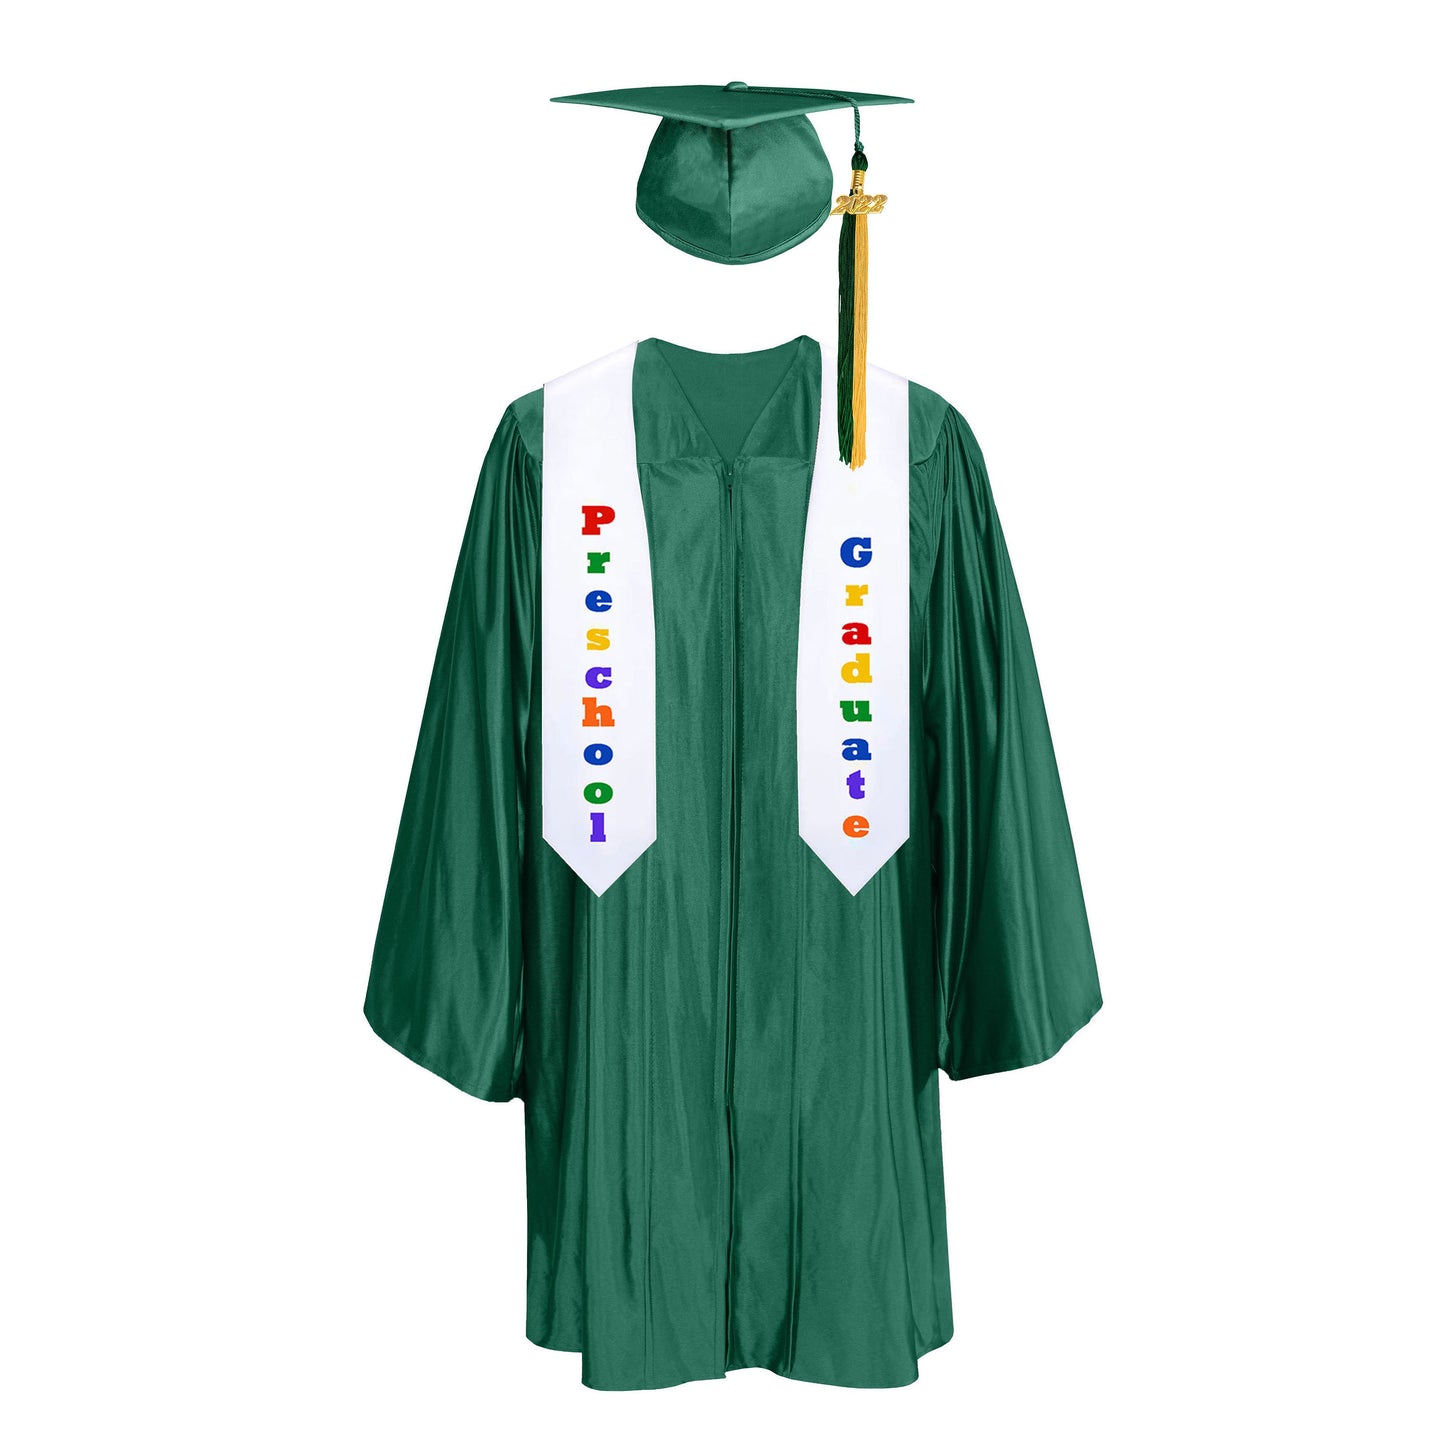 Preschool Kids Graduation Gowns Kindergarten Graduation Uniform Gowns And Caps with Colorful tassels-CA graduation